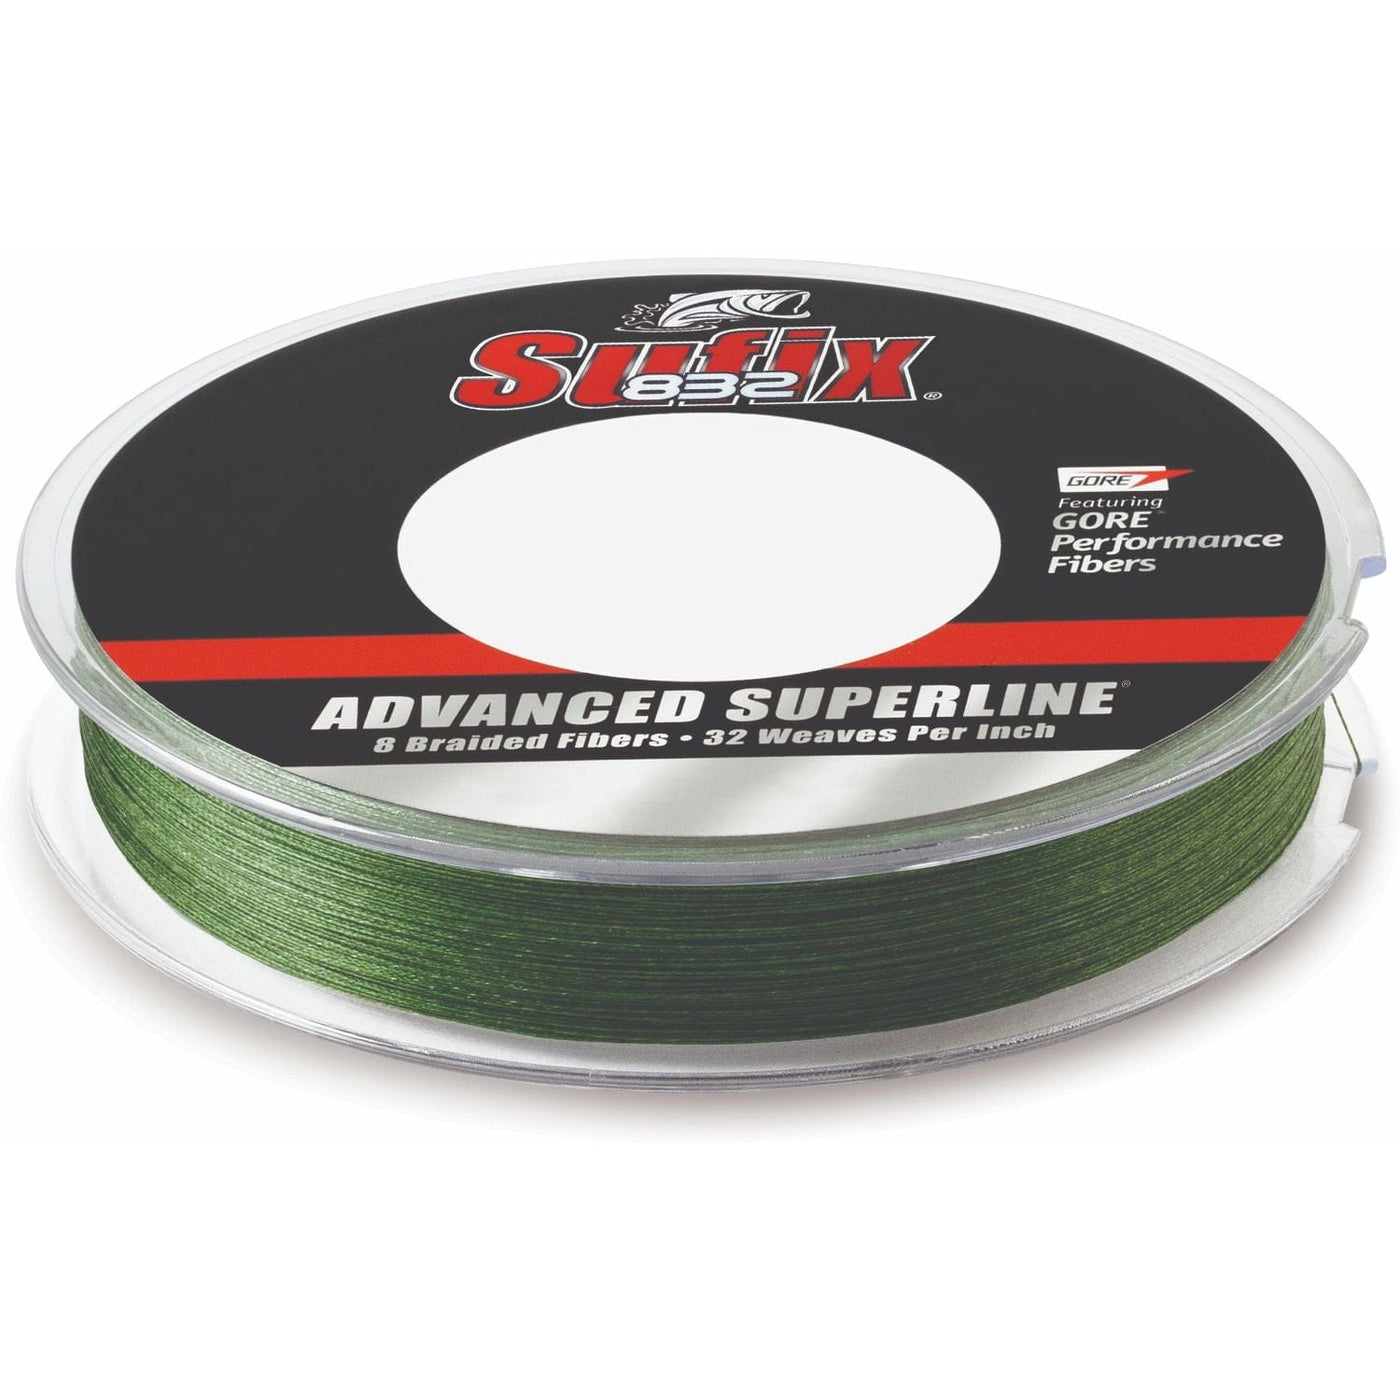 Sufix Sufix Advanced Superline 832 Braid lb 300 300 yards / 20 lb / LowVis Green Fishing